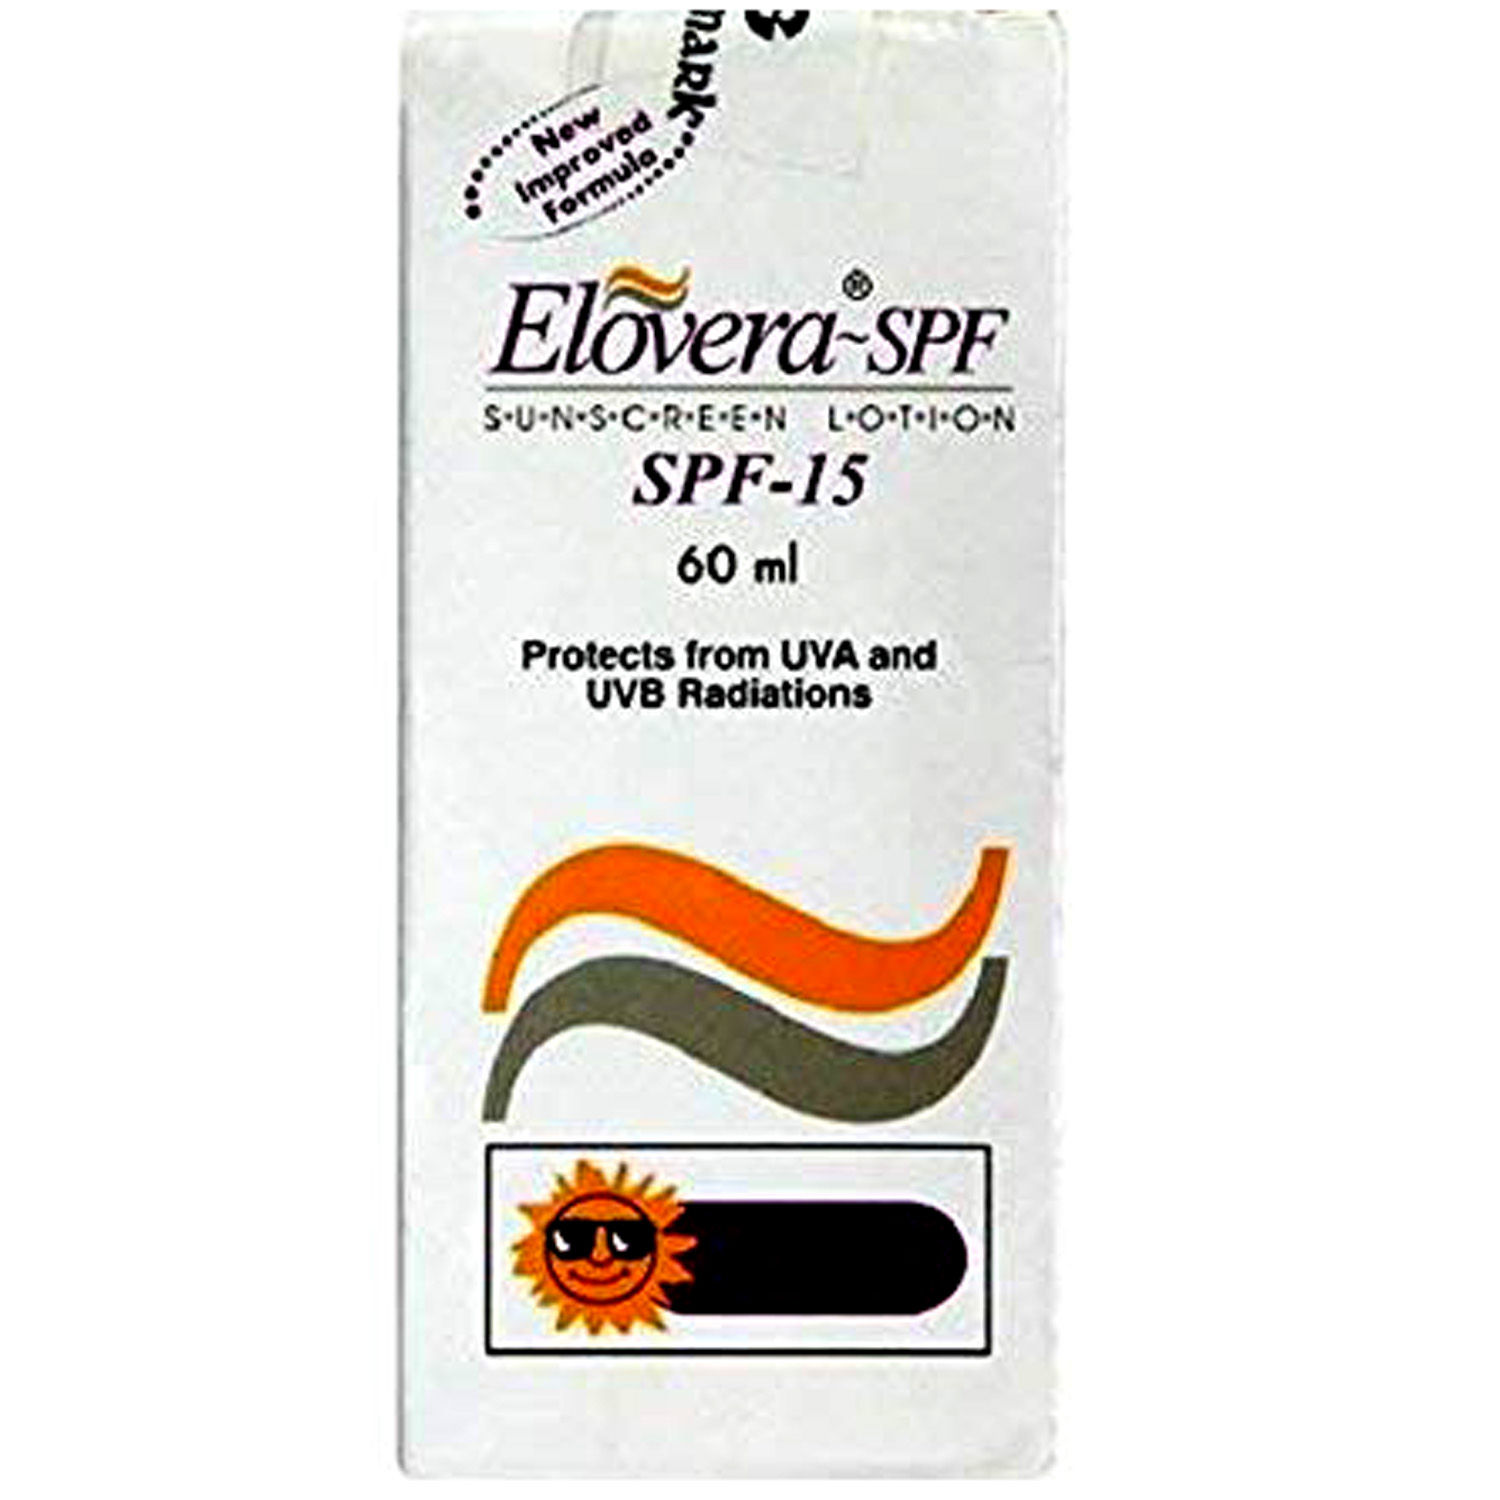 Buy Elovera-SPF Sunscreen Lotion SPF 15, 60 ml Online